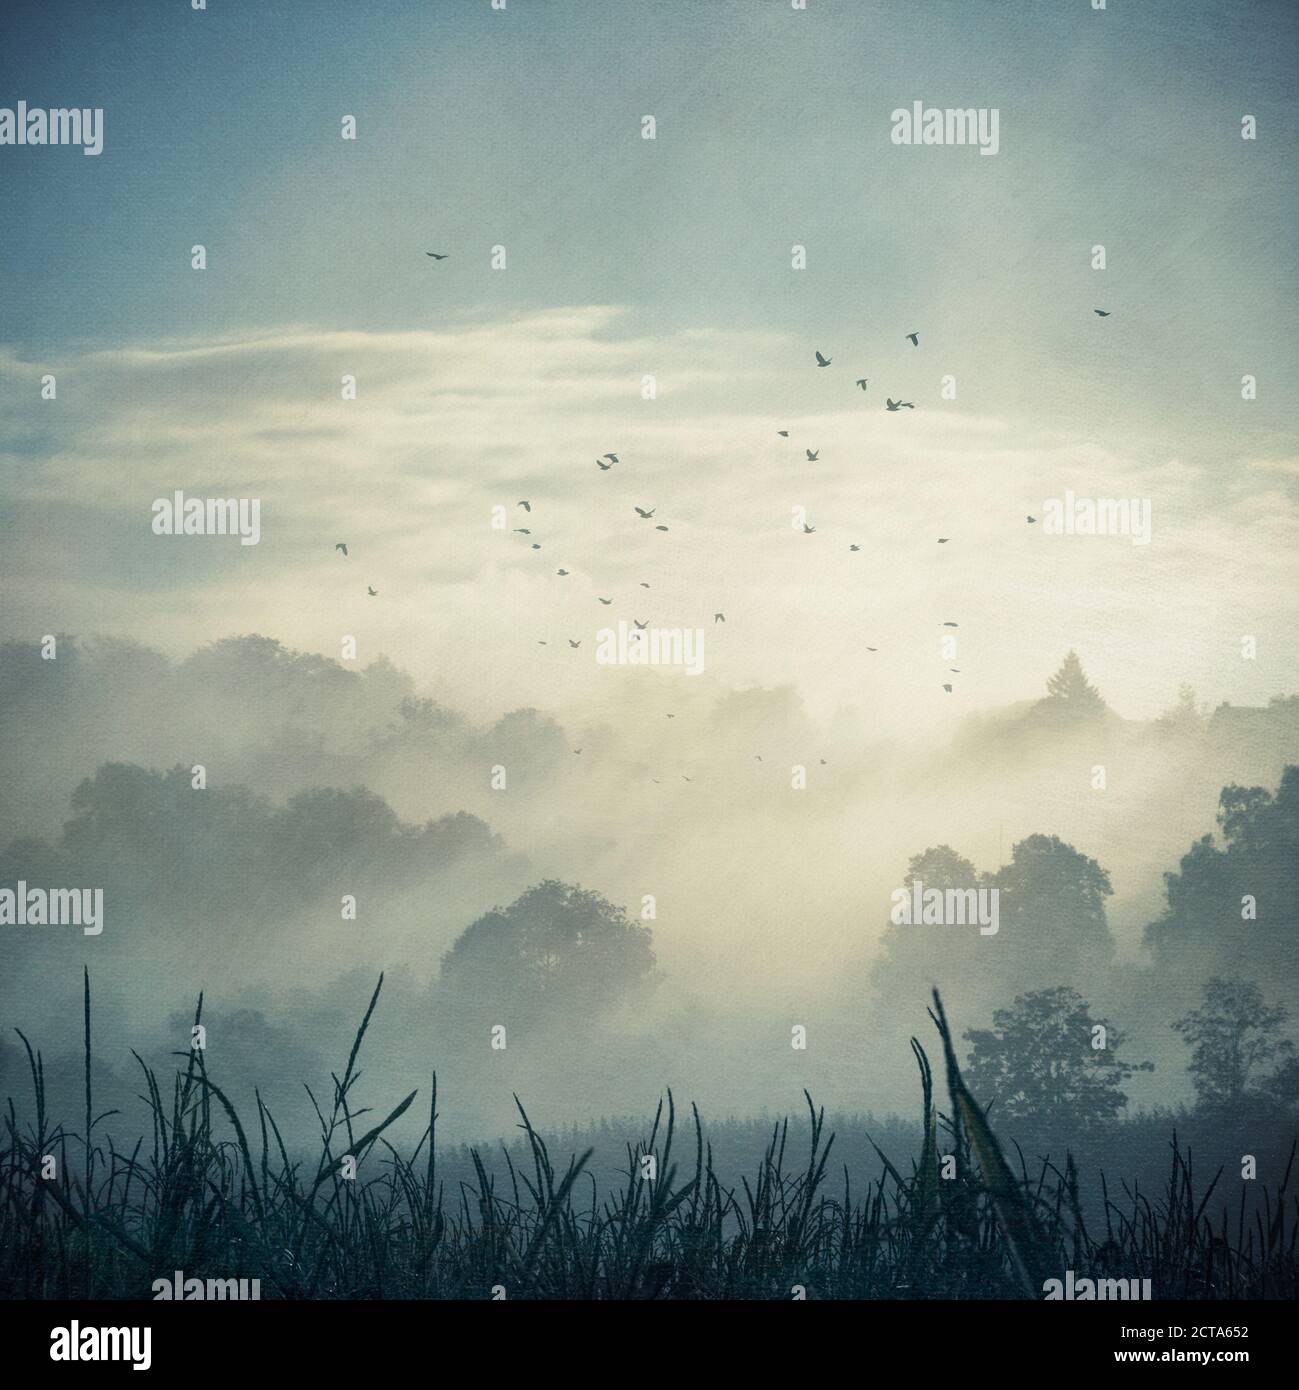 Misty landscape at backlight, composite Stock Photo